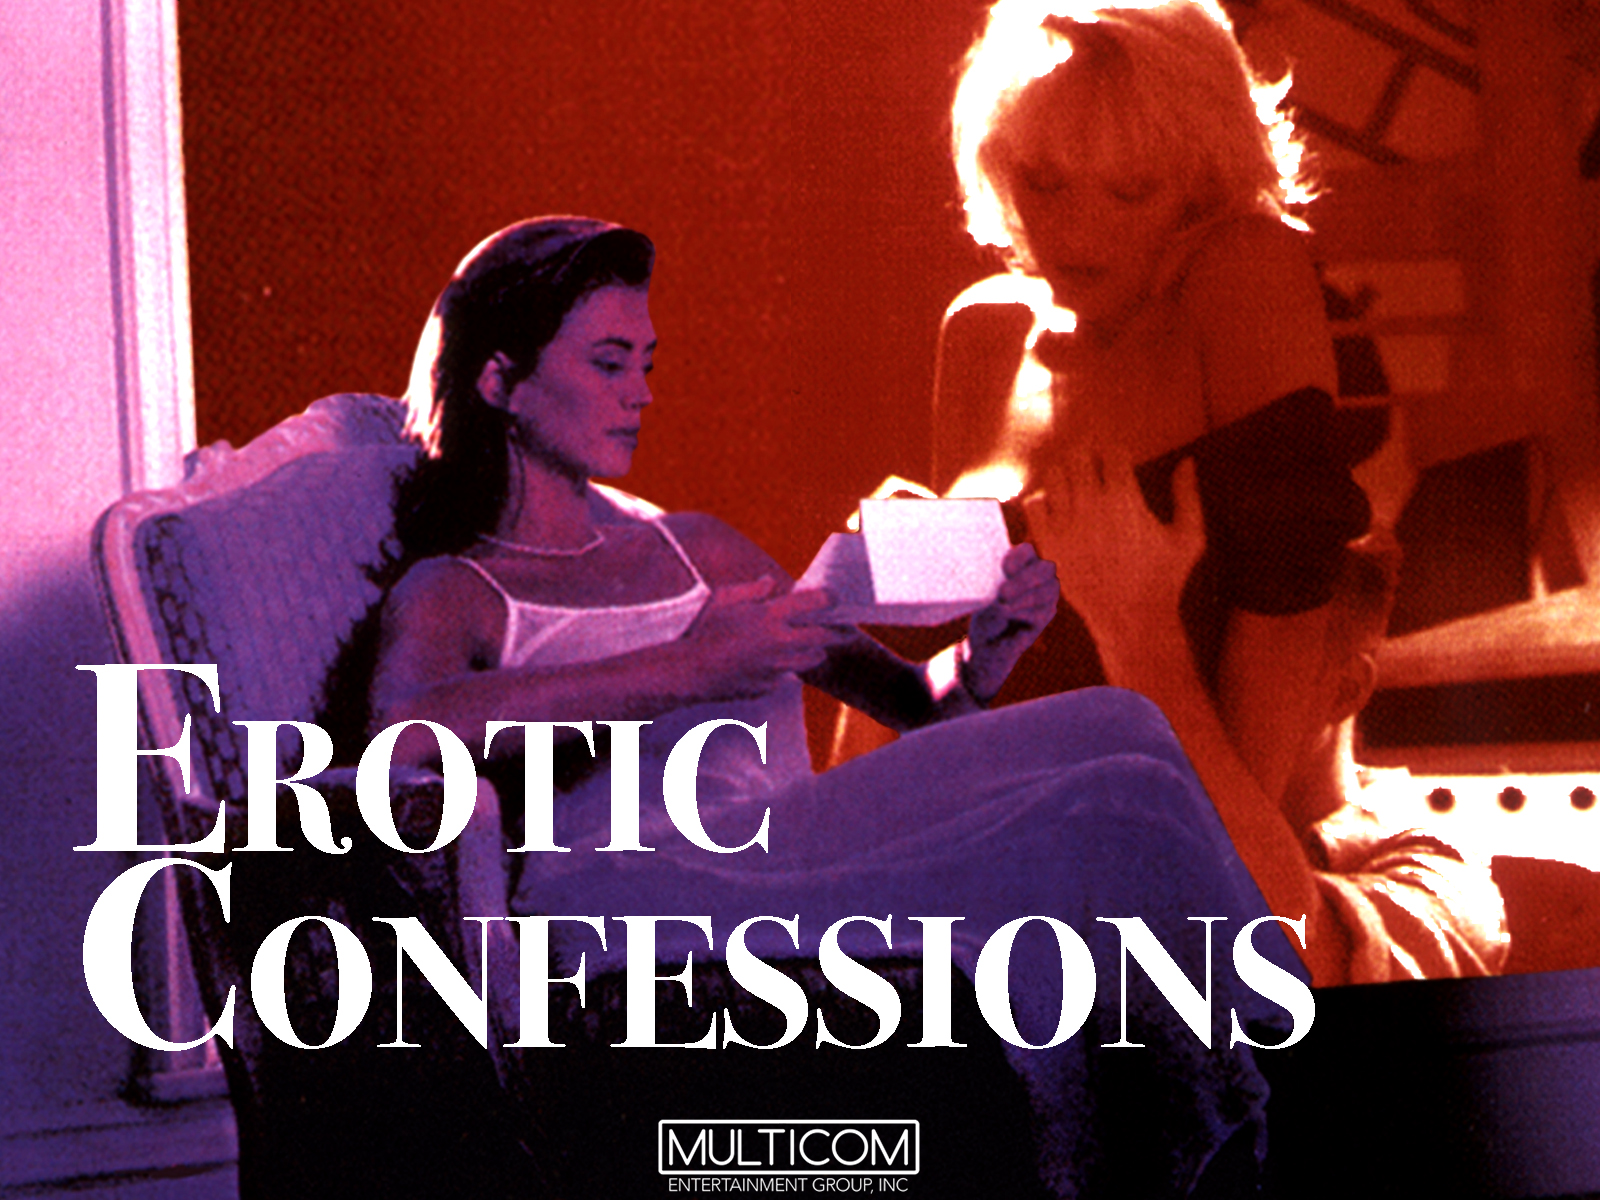 Erotic Confessions (1994) Screenshot 1 